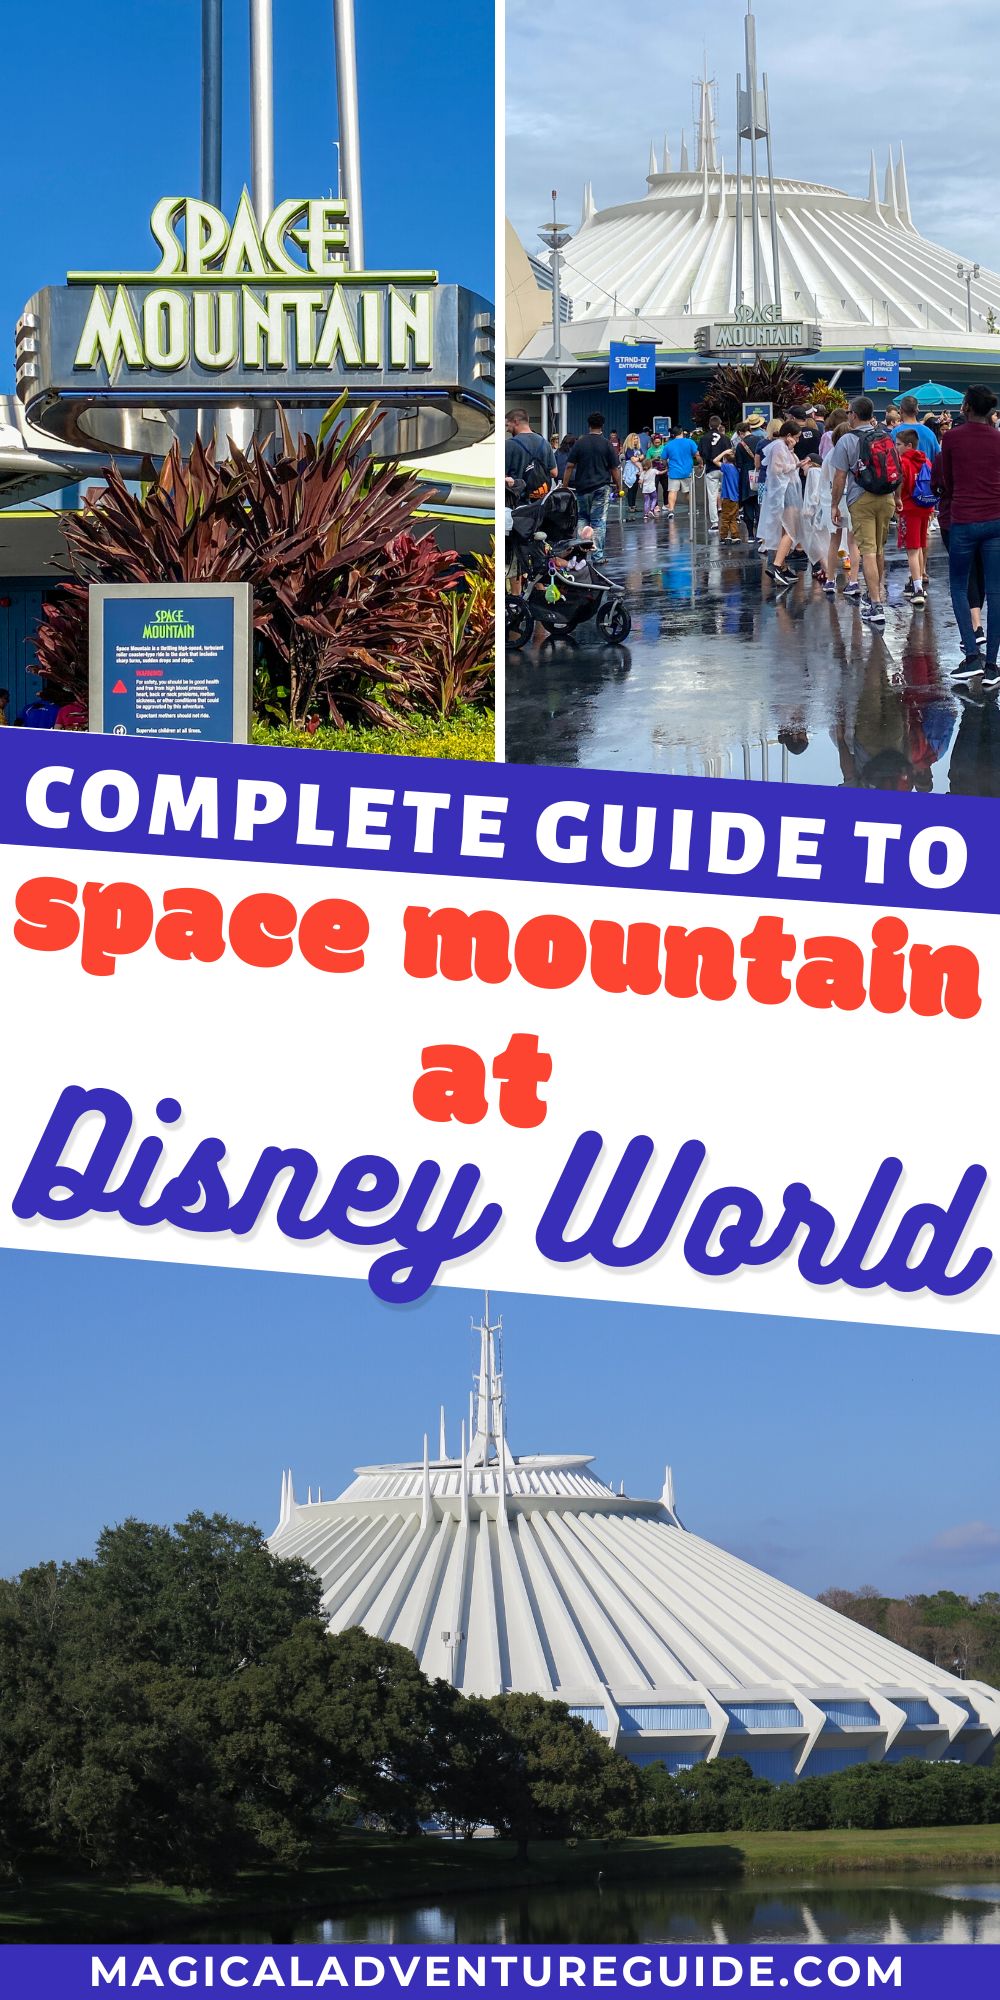 3 photos featuring external views of Space Mountain at Disney World